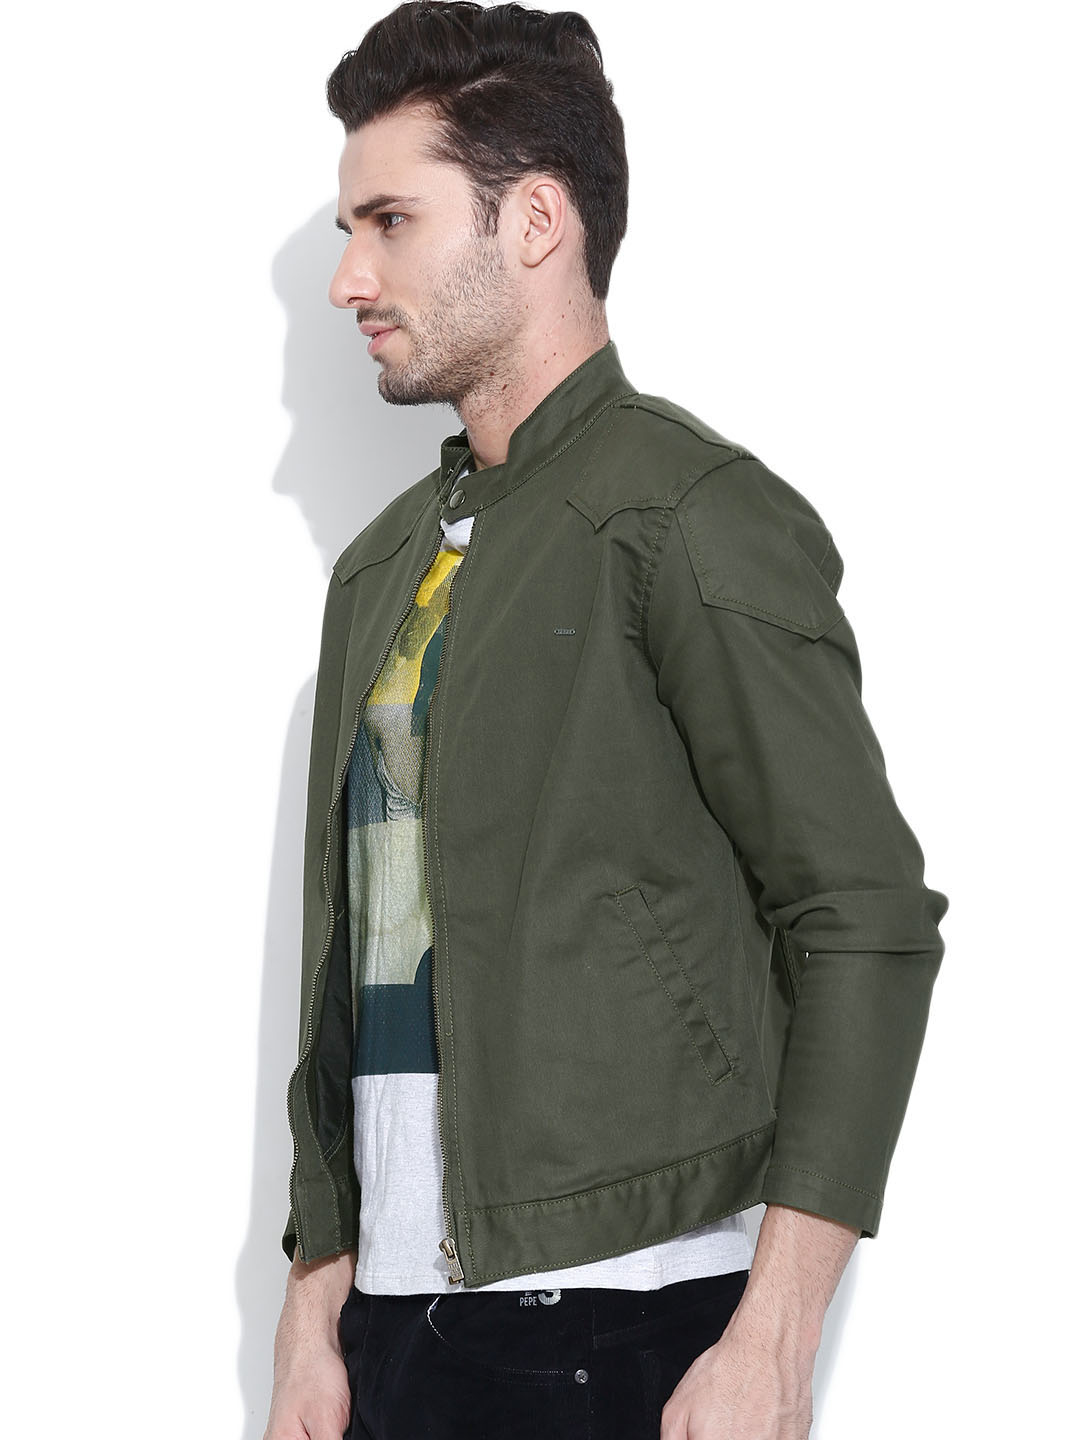 olive green jean jacket